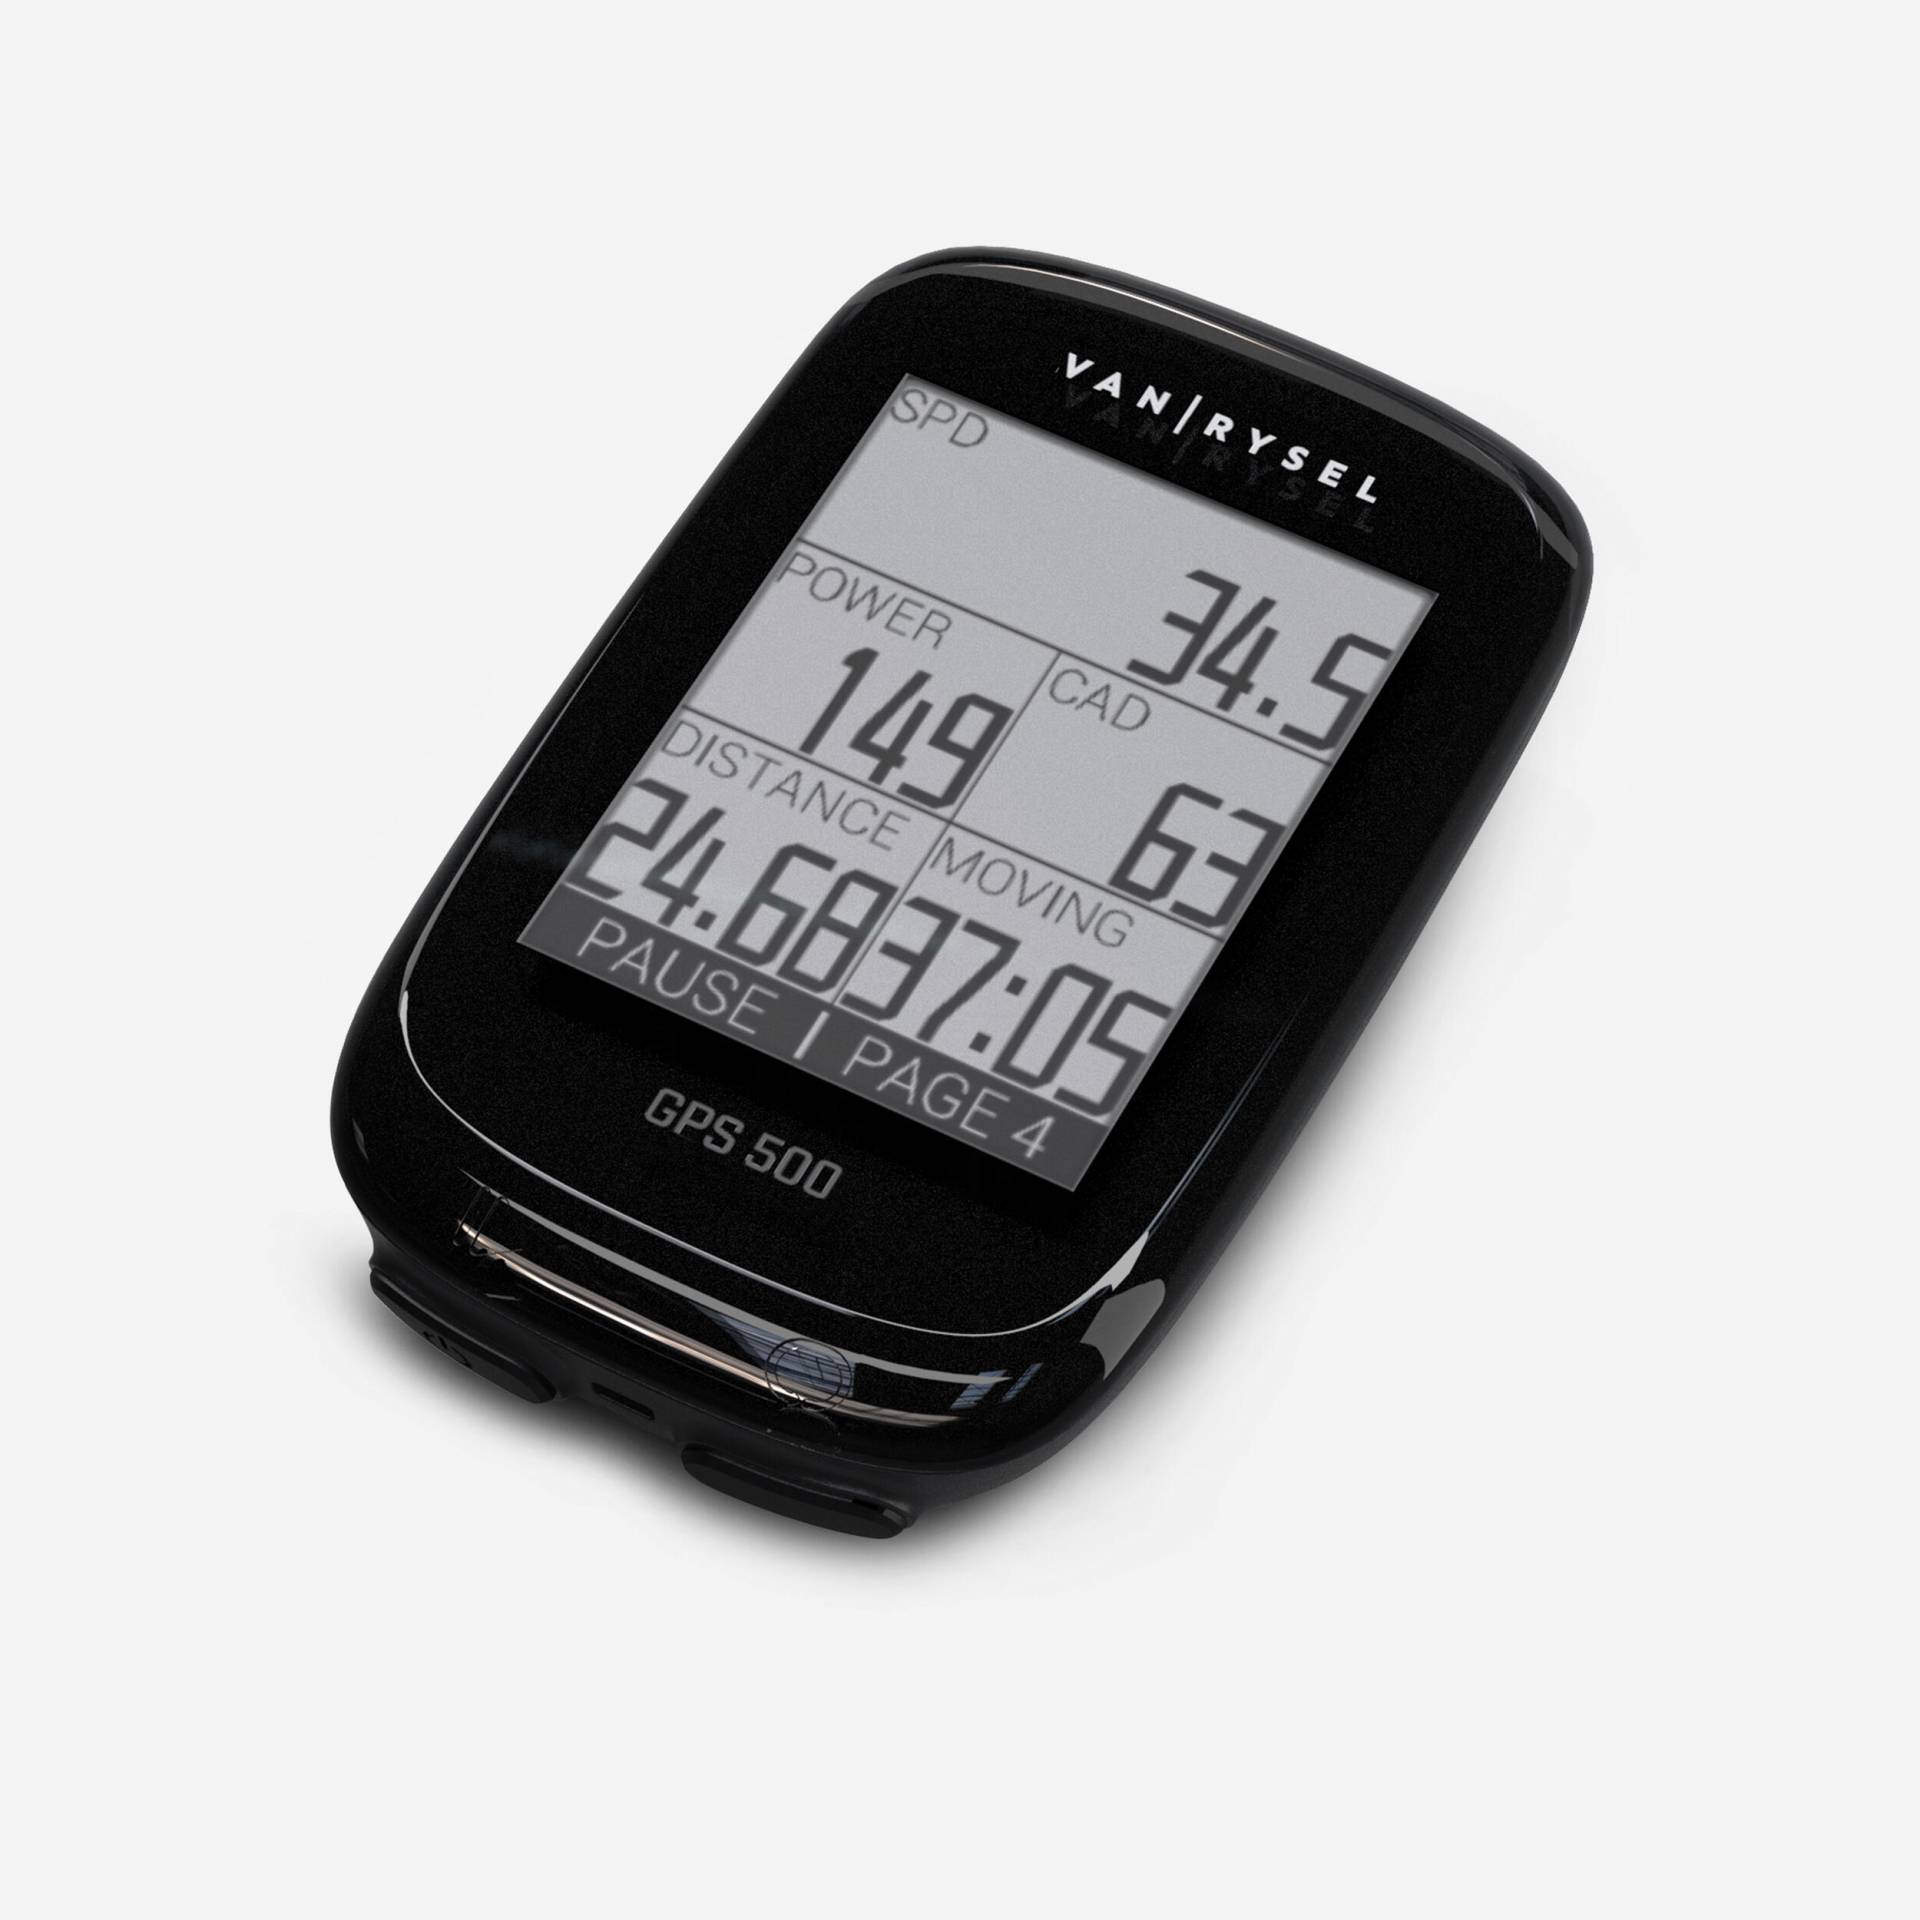 Fahrradcomputer GPS 500 von VAN RYSEL